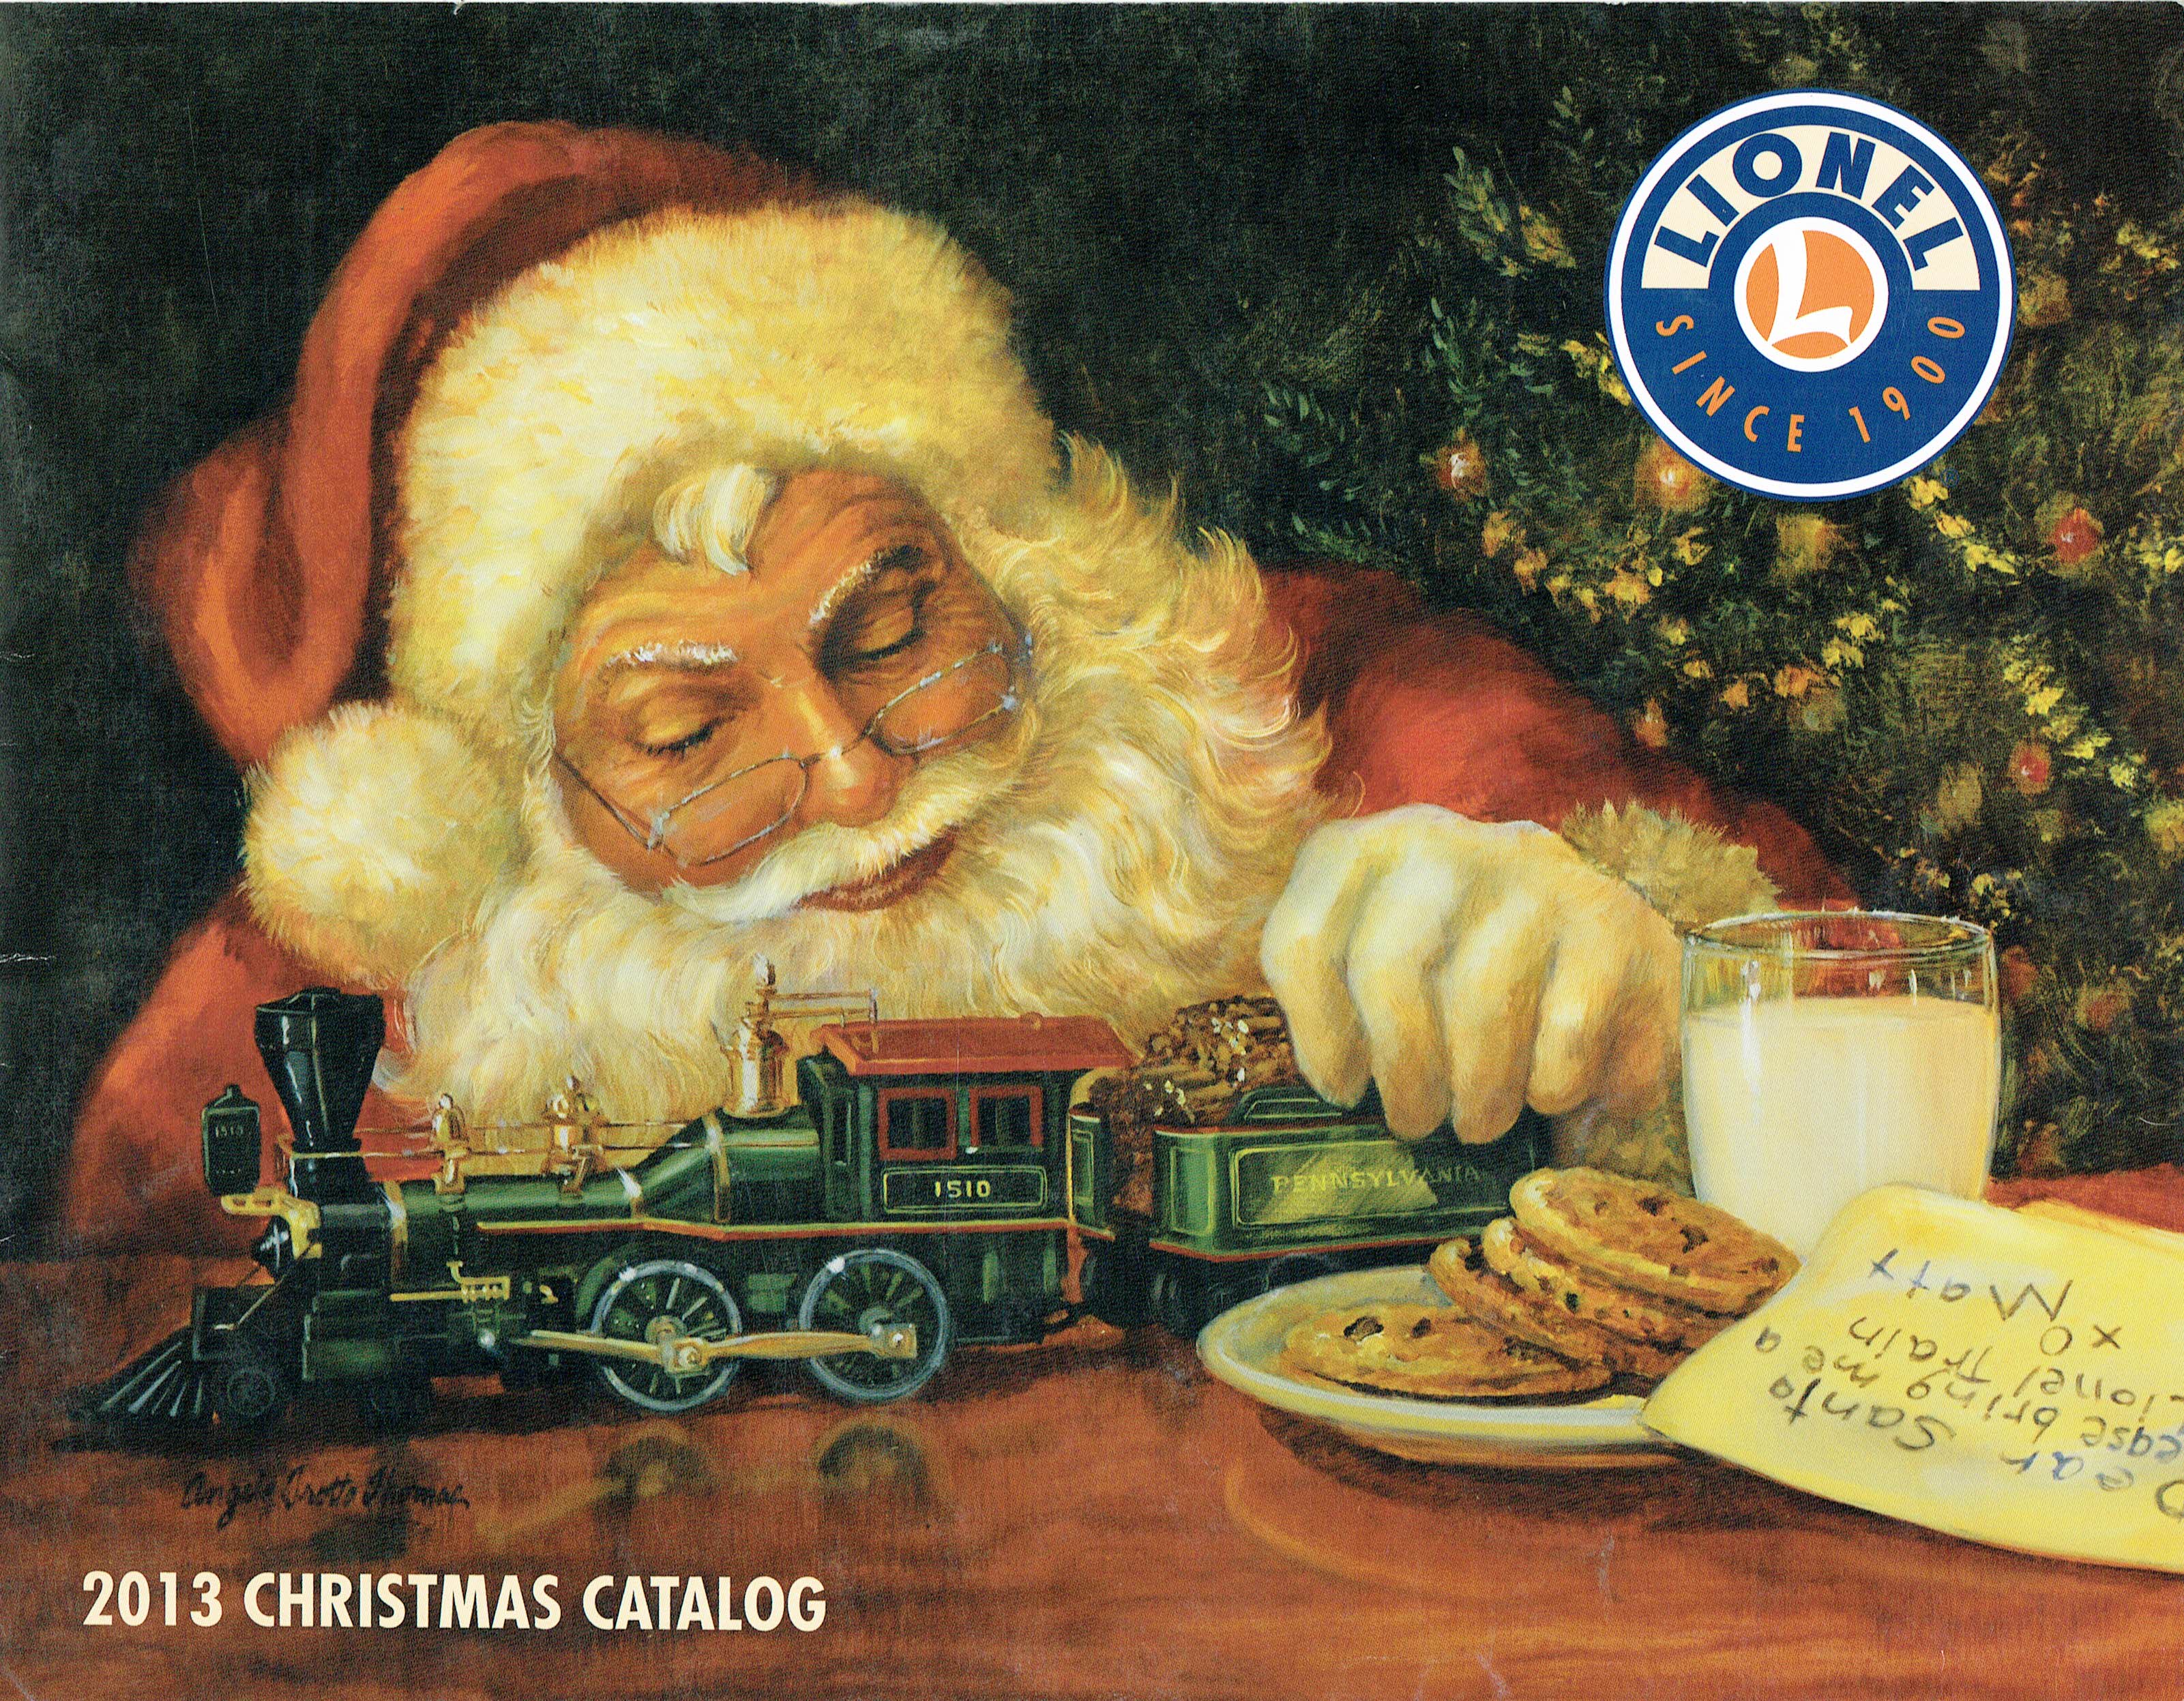 Lionel 2013 Christmas Catalog image